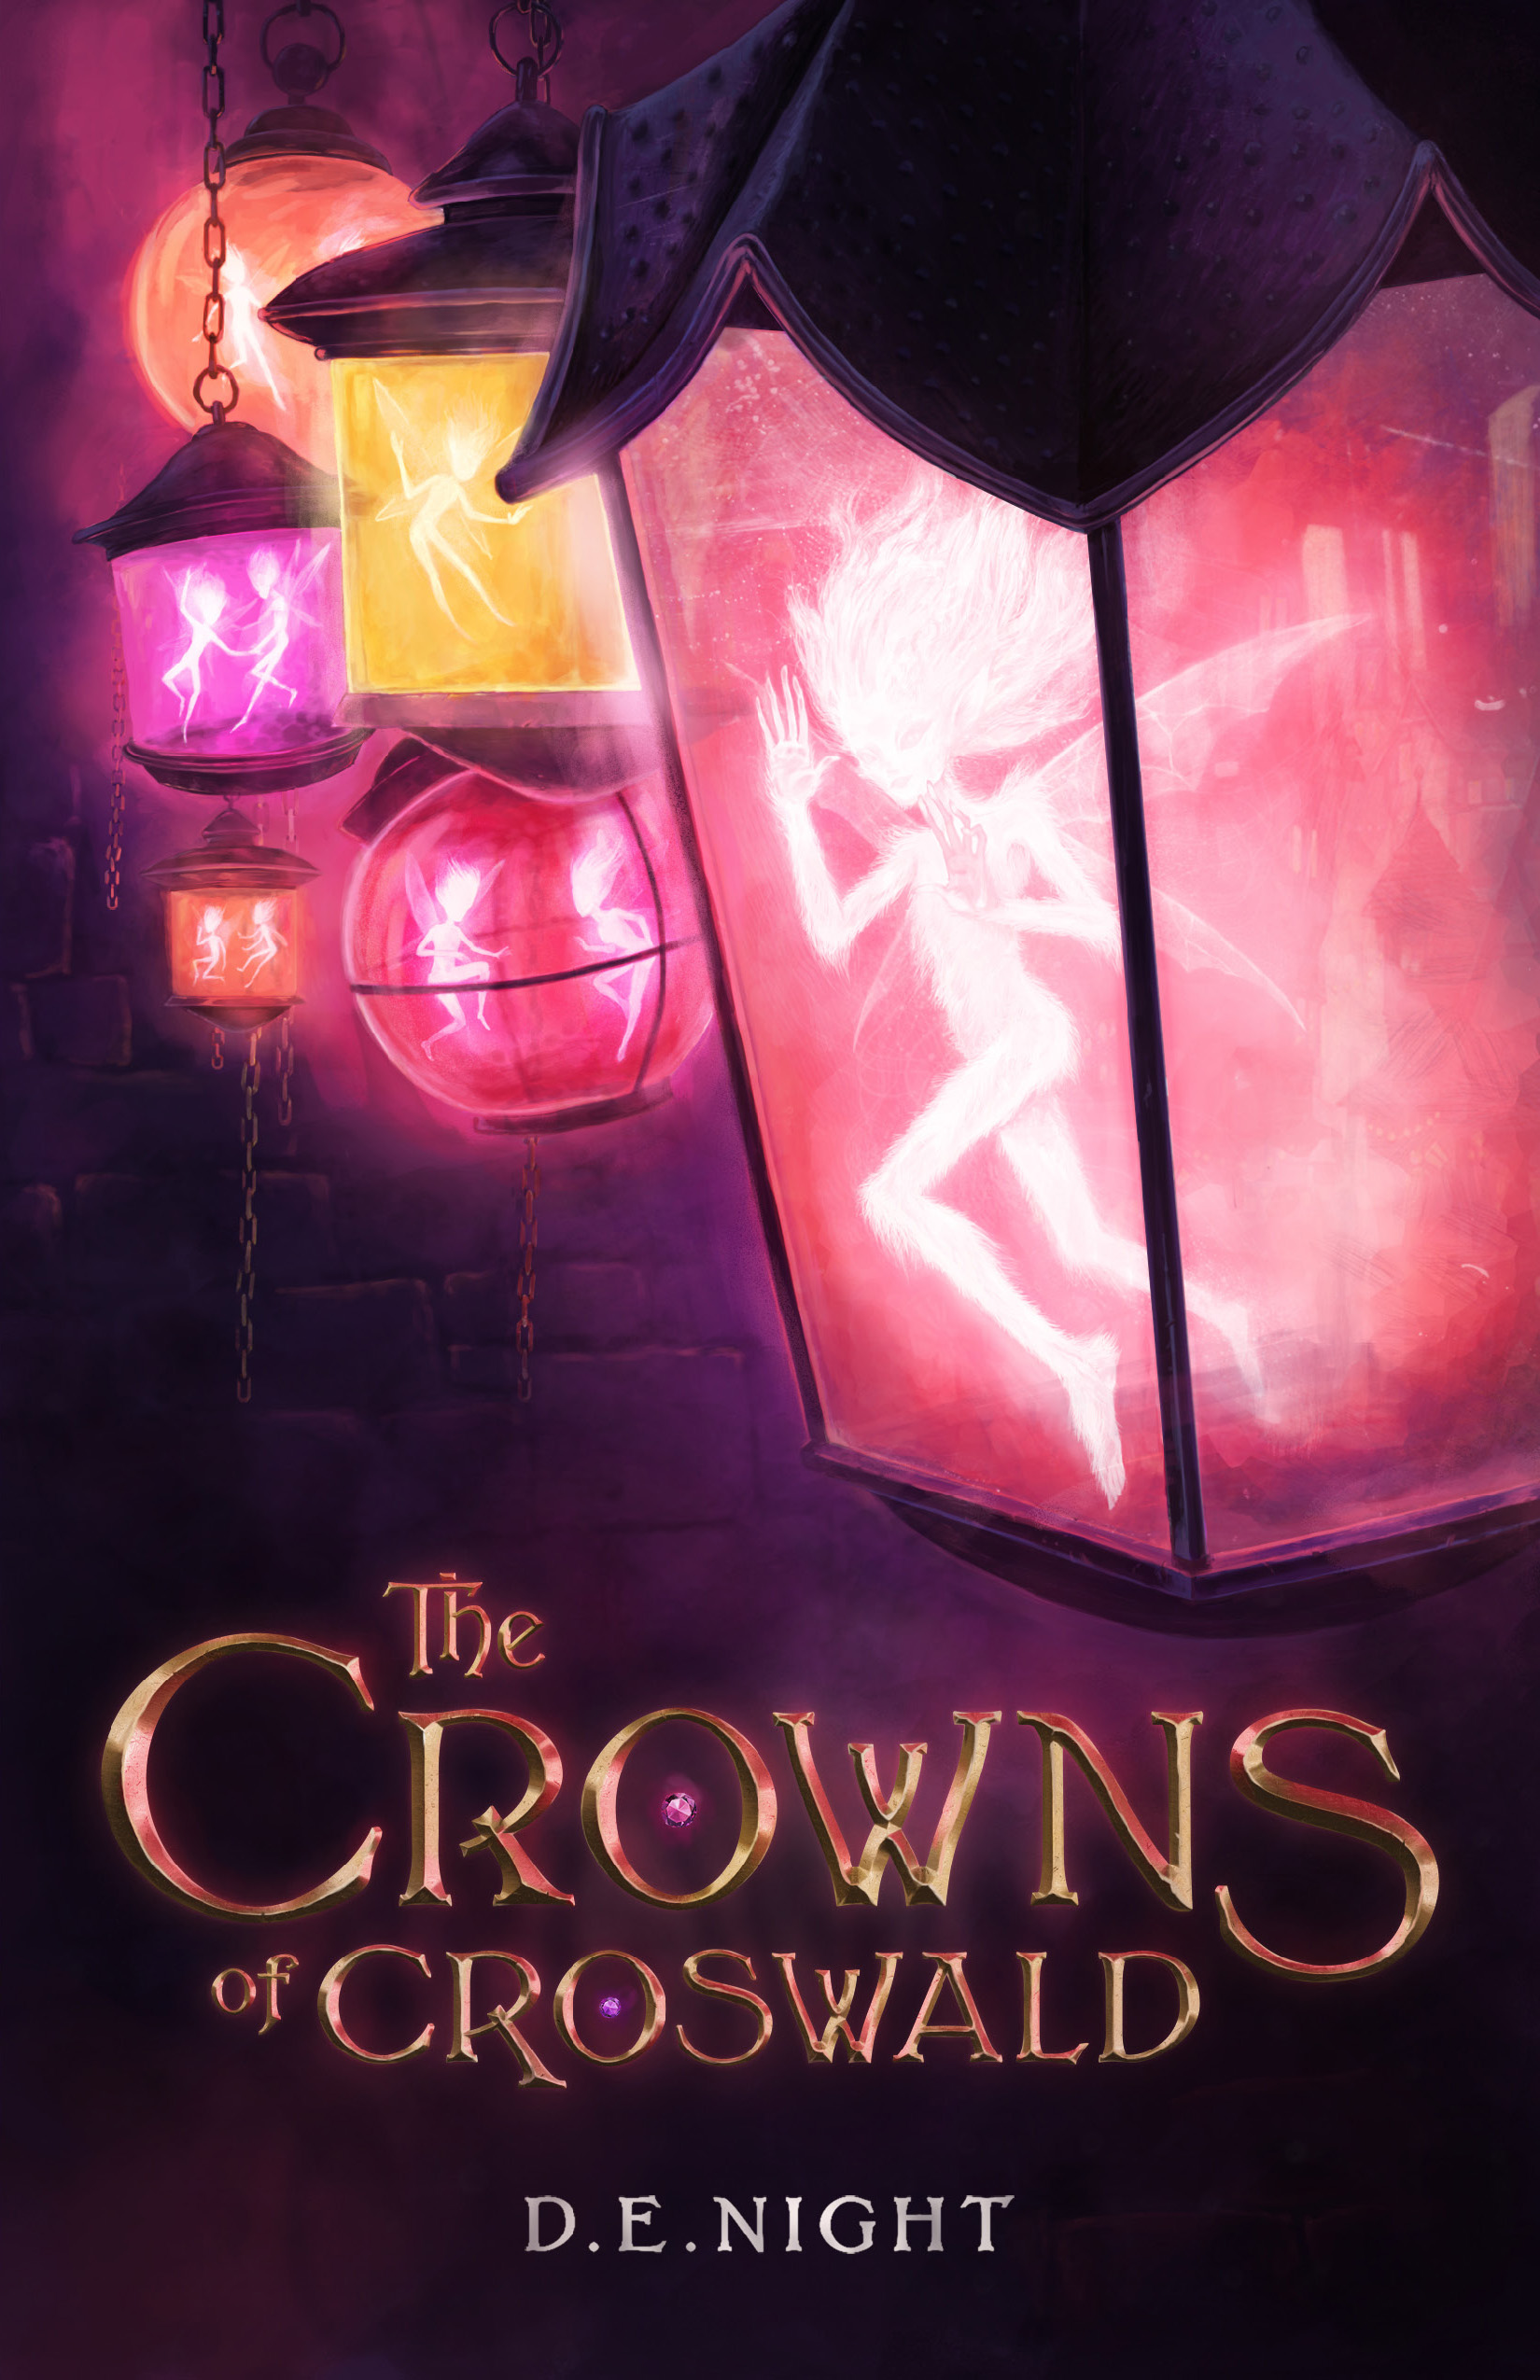 #CrownsOfCroswald #book #ad